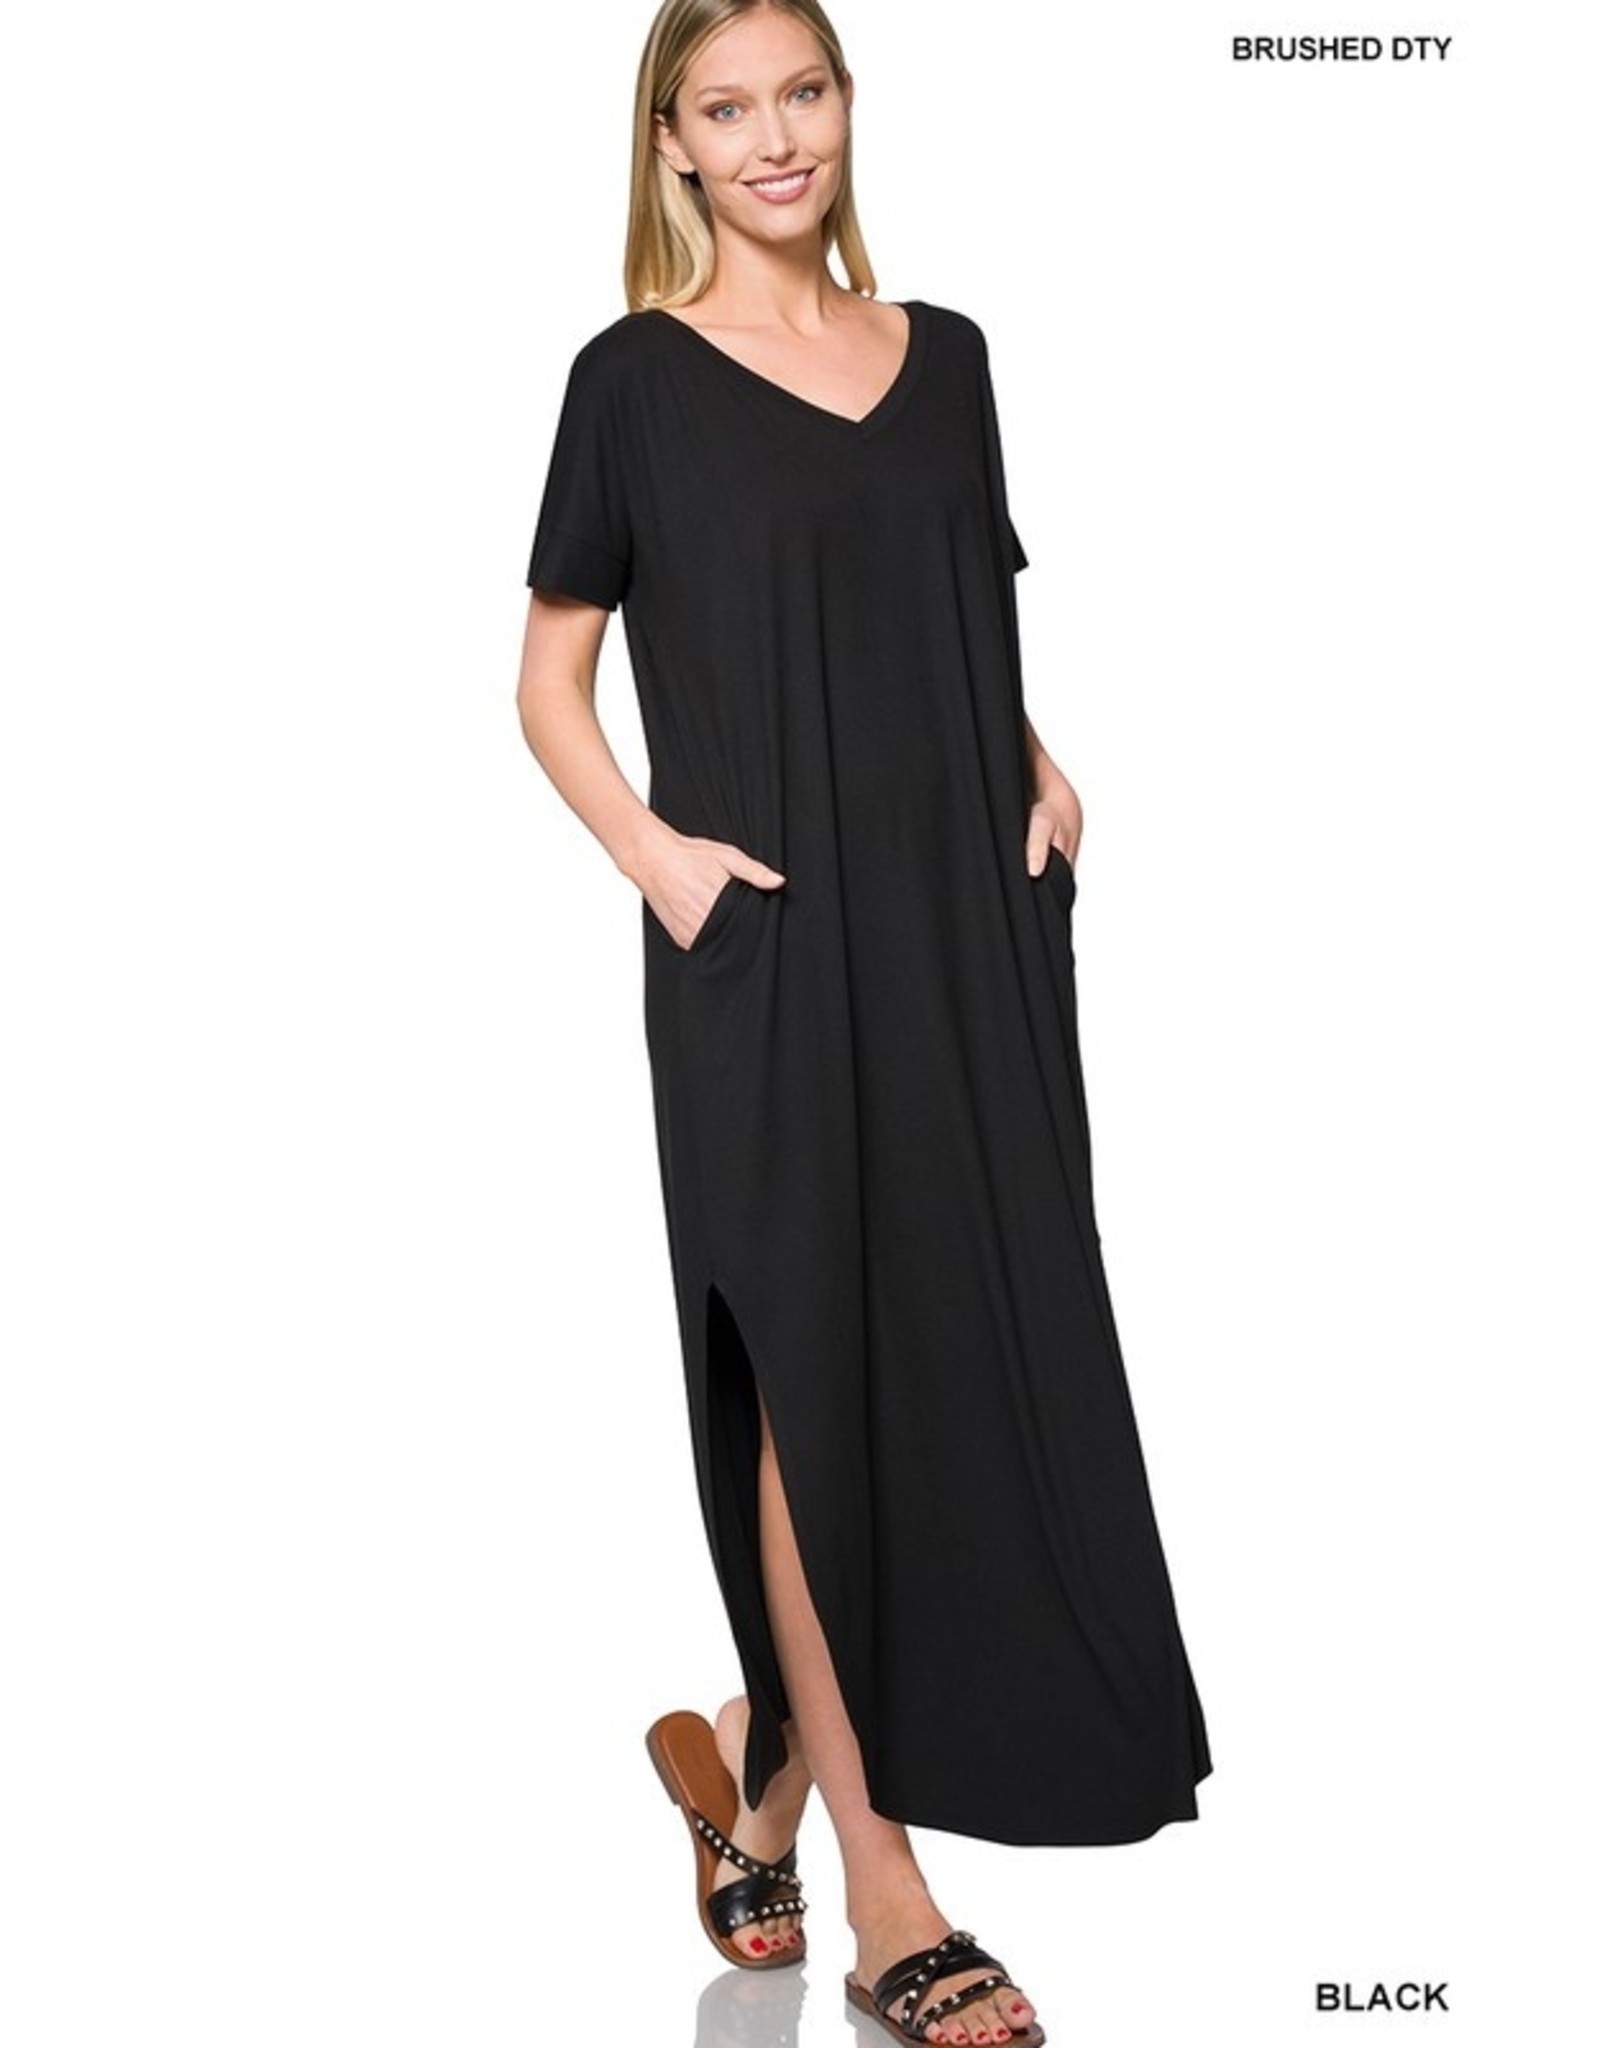 Zenana Premium Brushed Black Maxi Dress